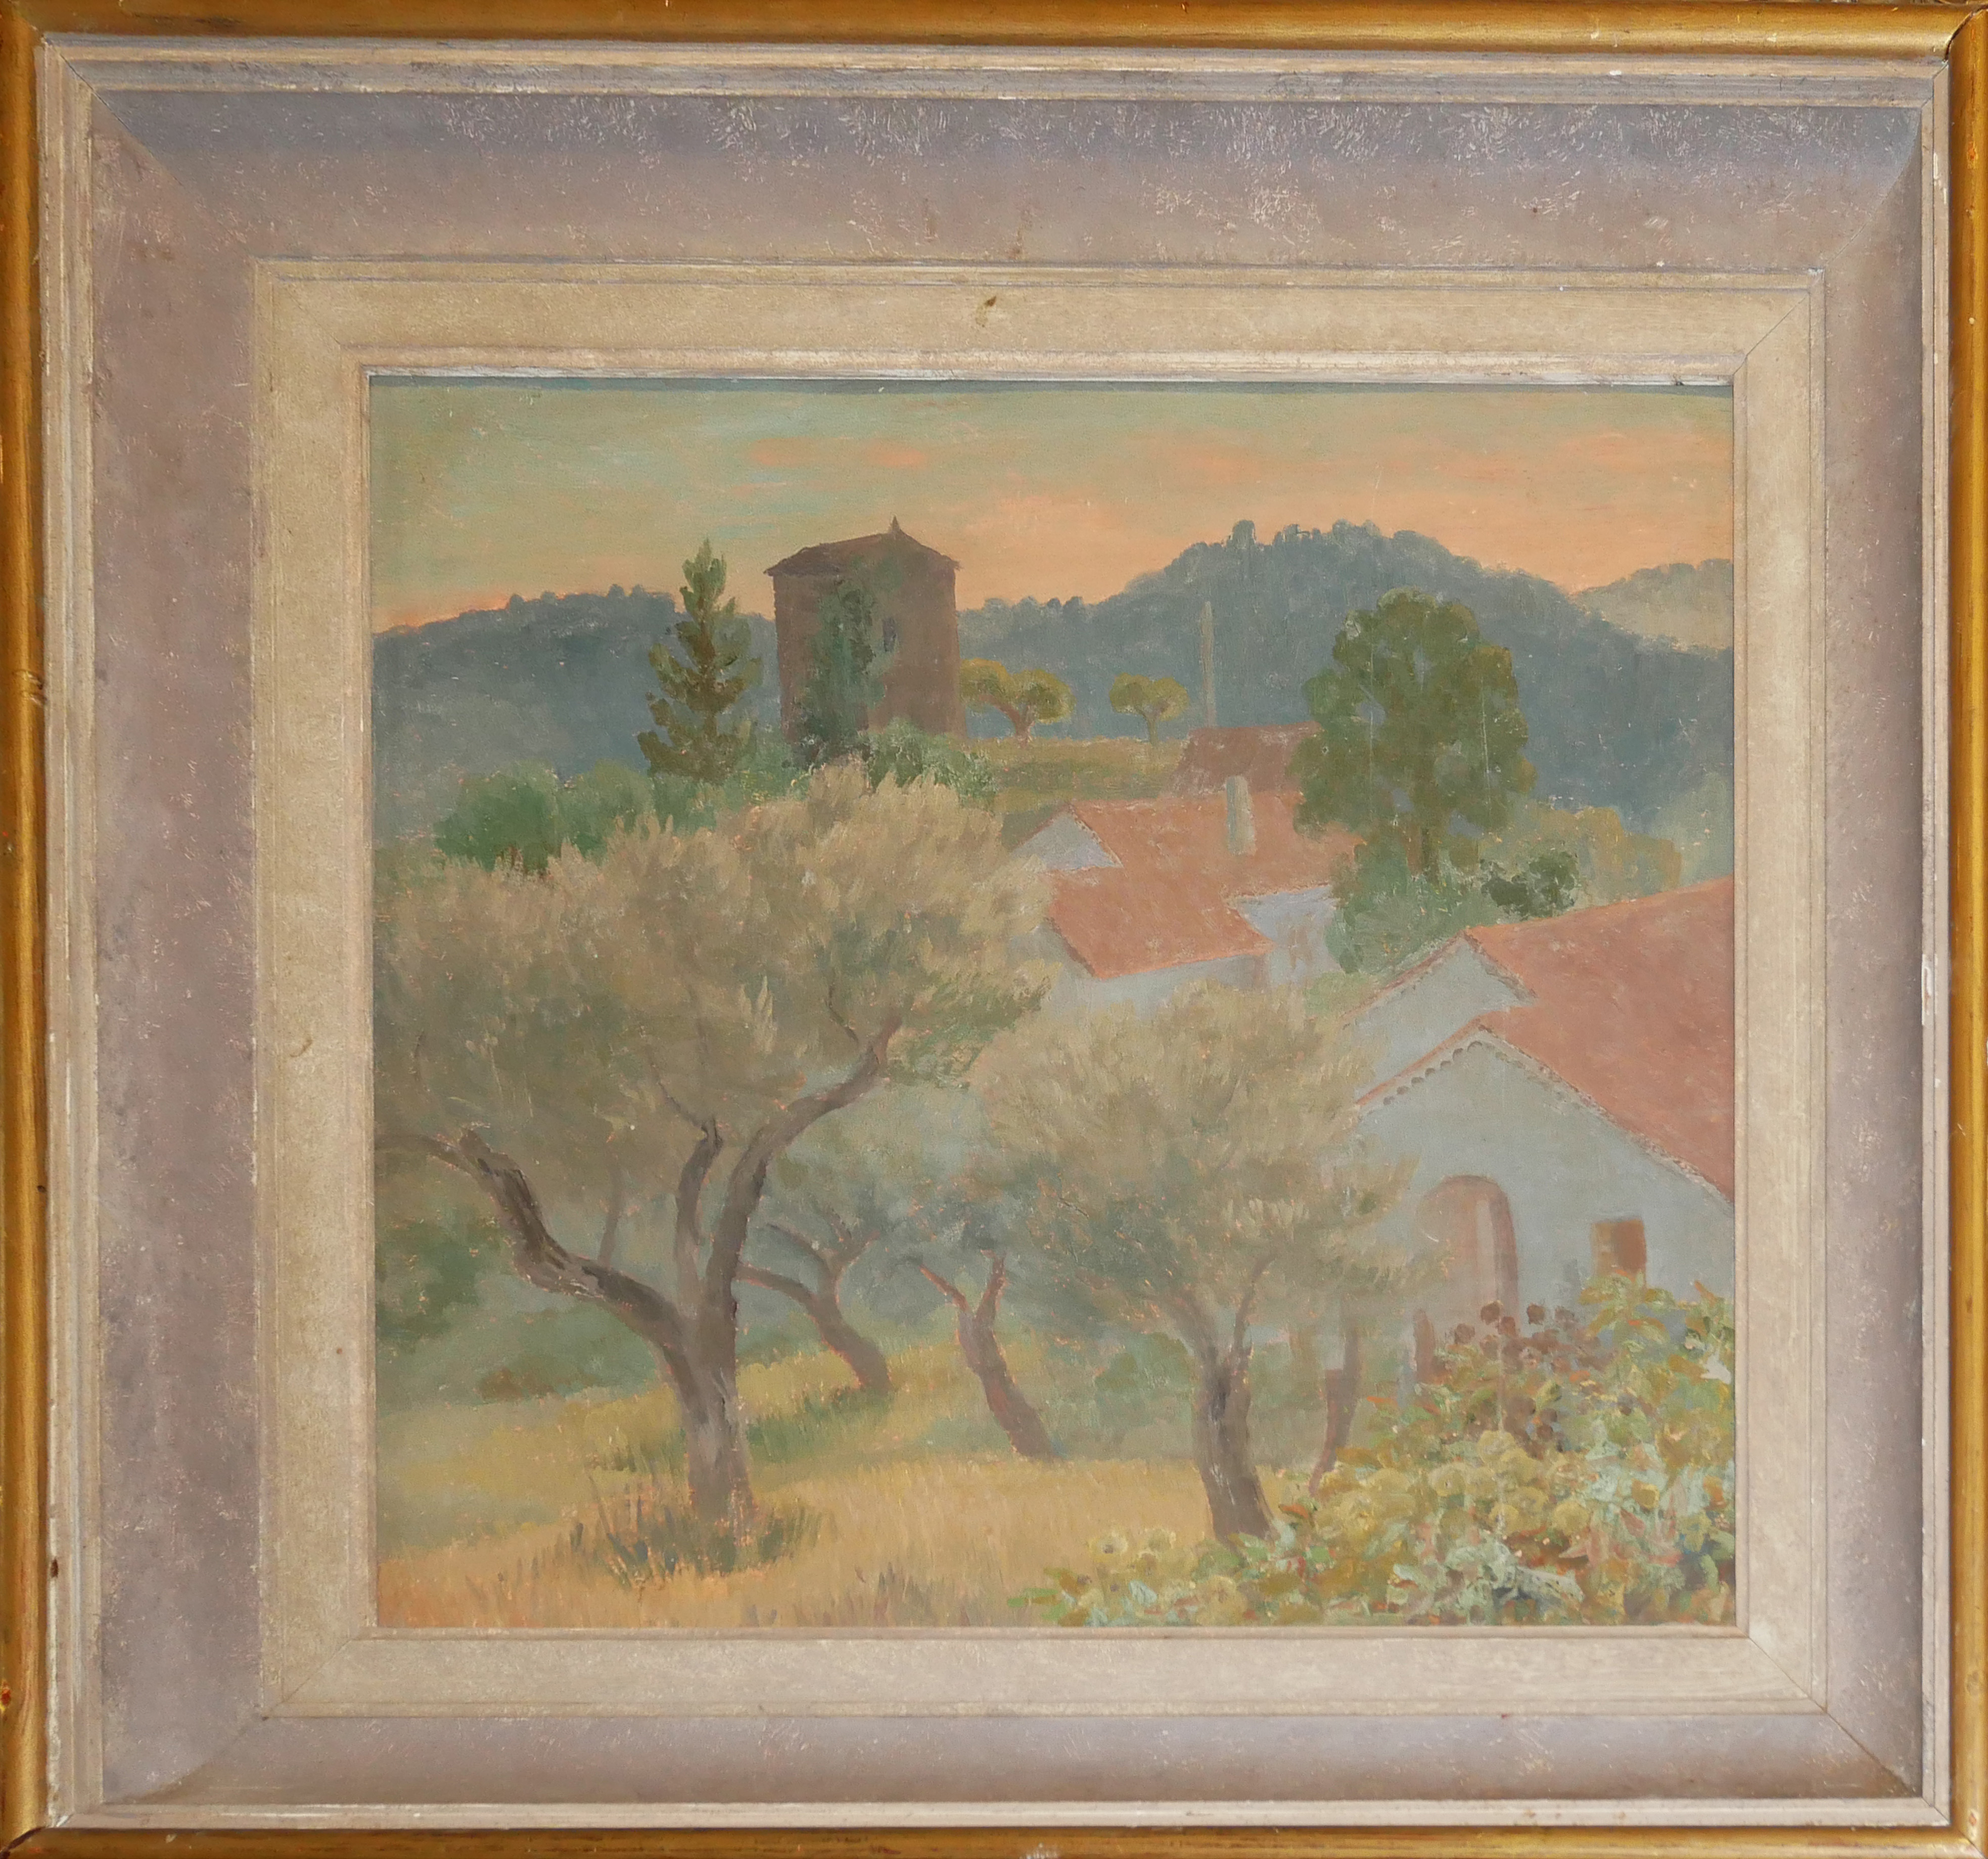 CEDRIC MORRIS?, OIL ON BOARD Italian Landscape, framed. 60cm x 57cm N.B. possibly Cedric Morris as - Image 3 of 6